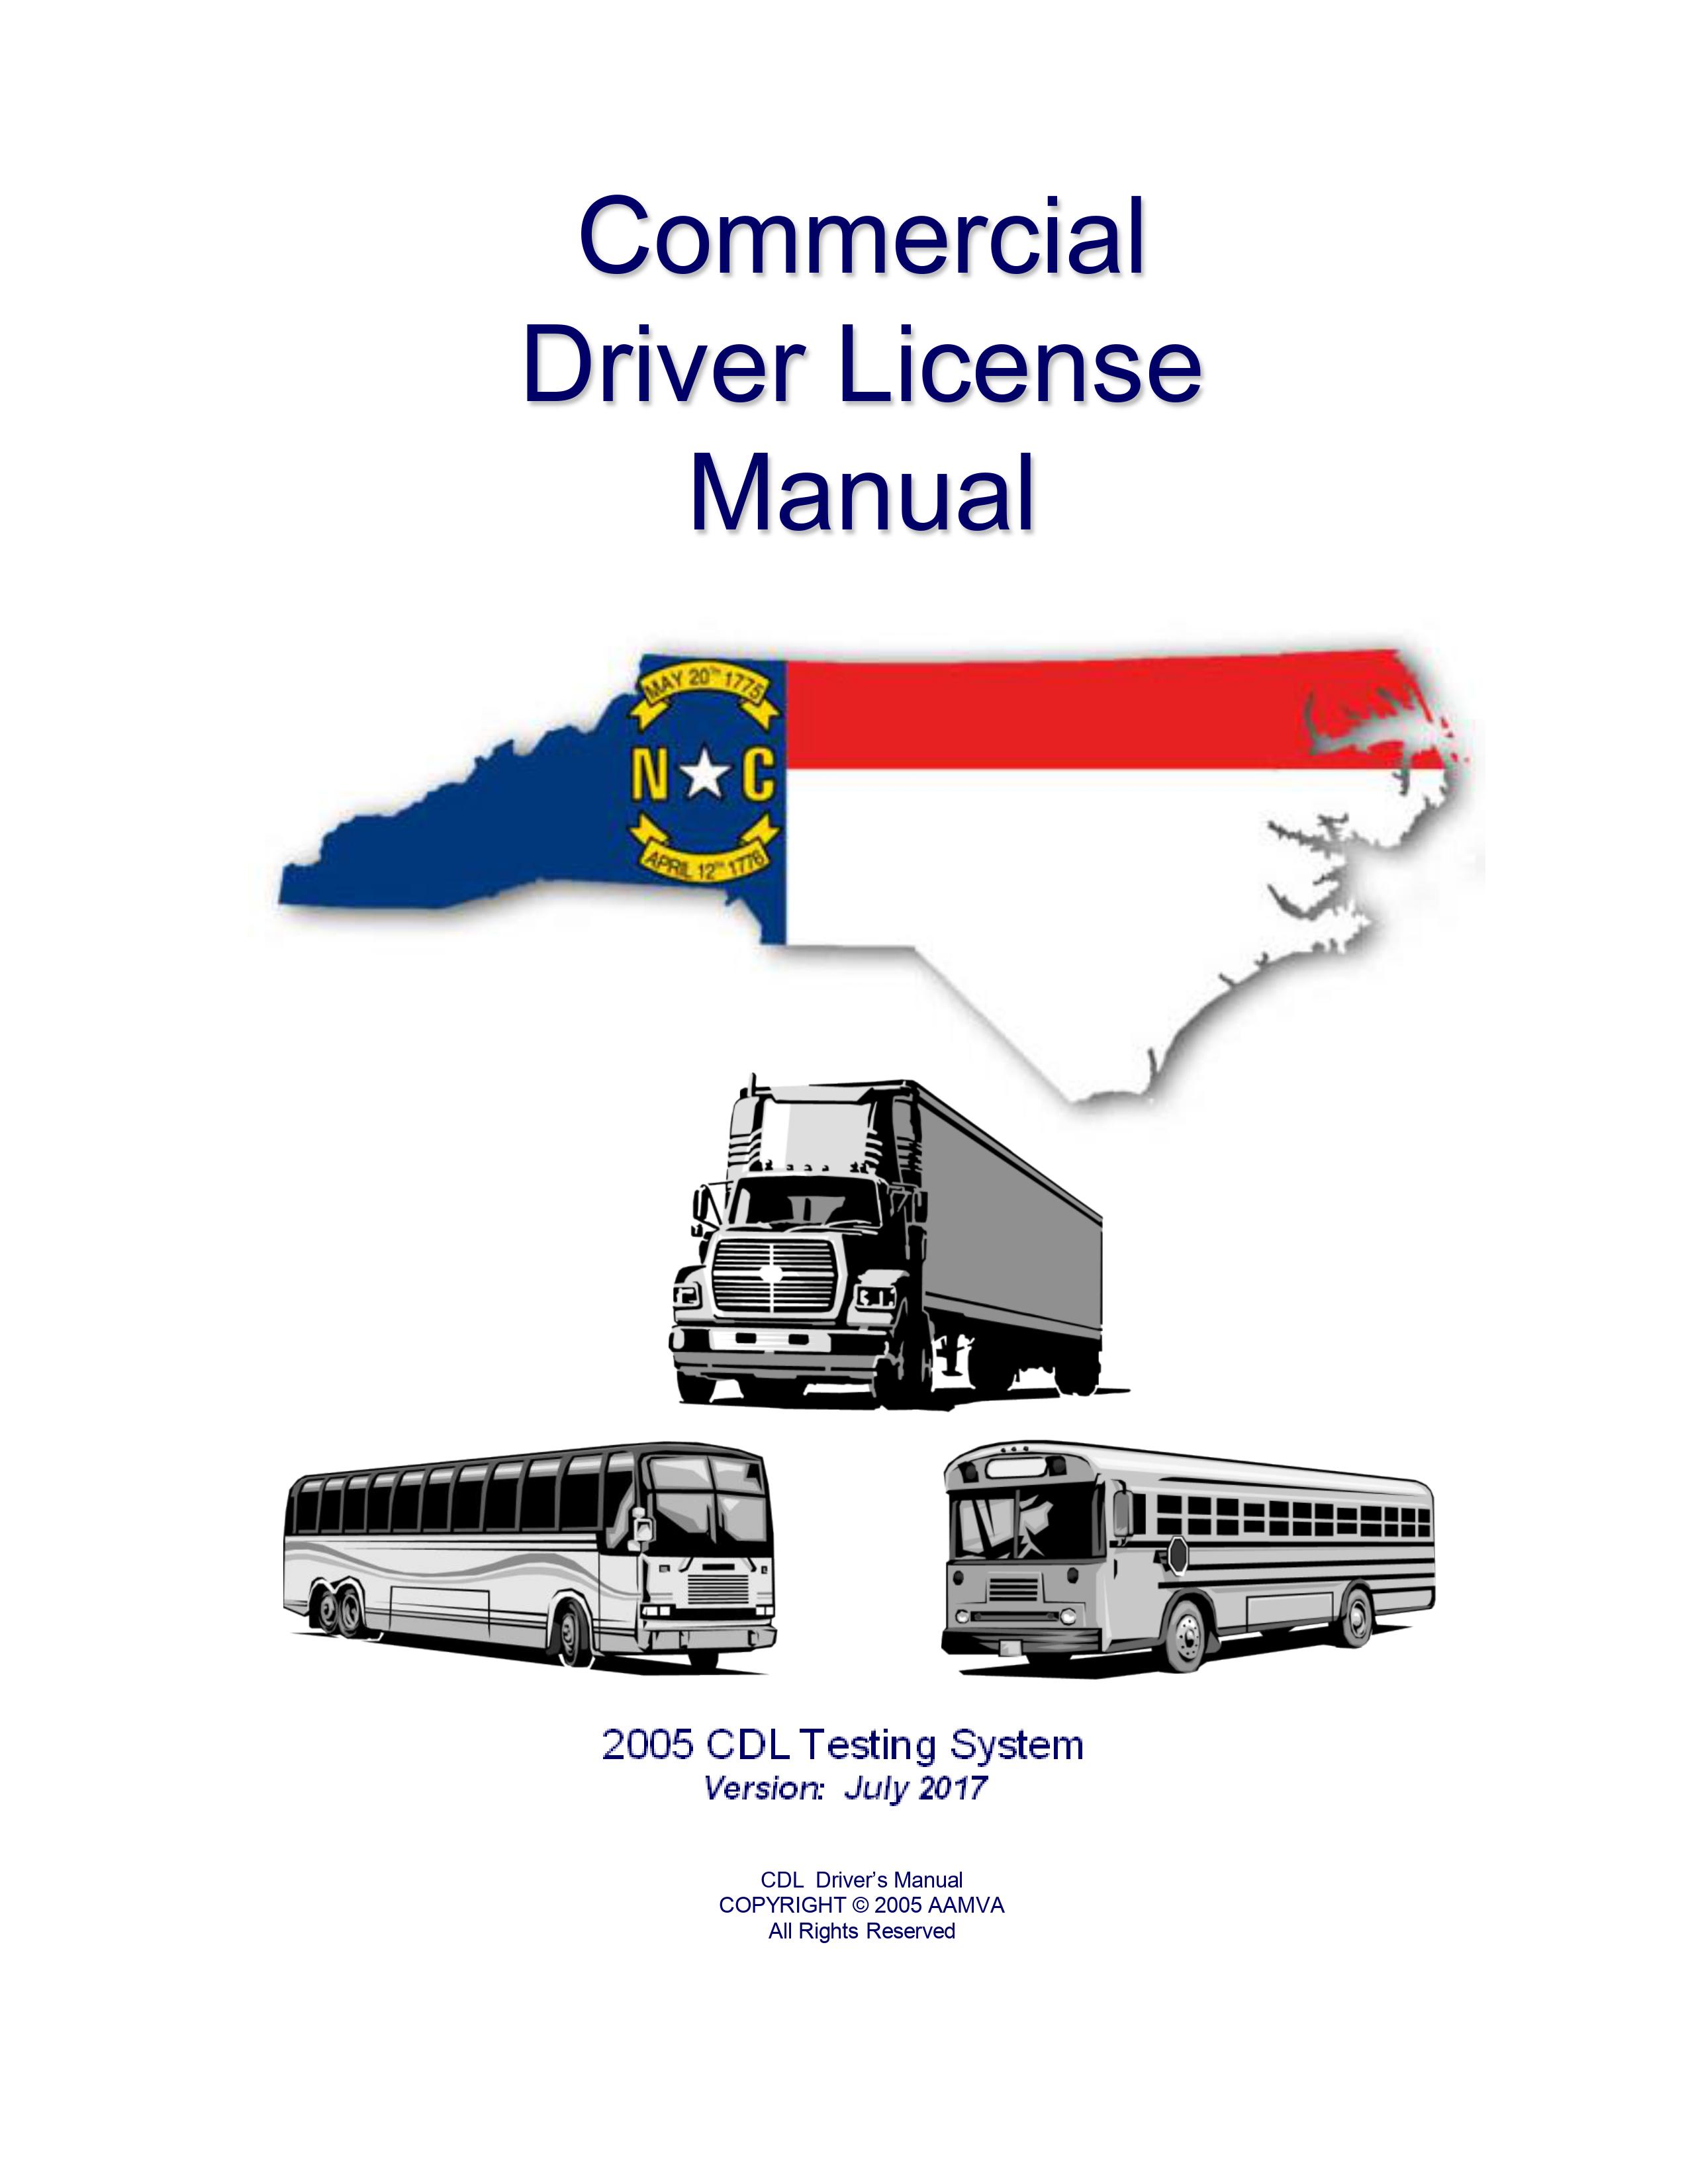 North Carolina's CDL Manual